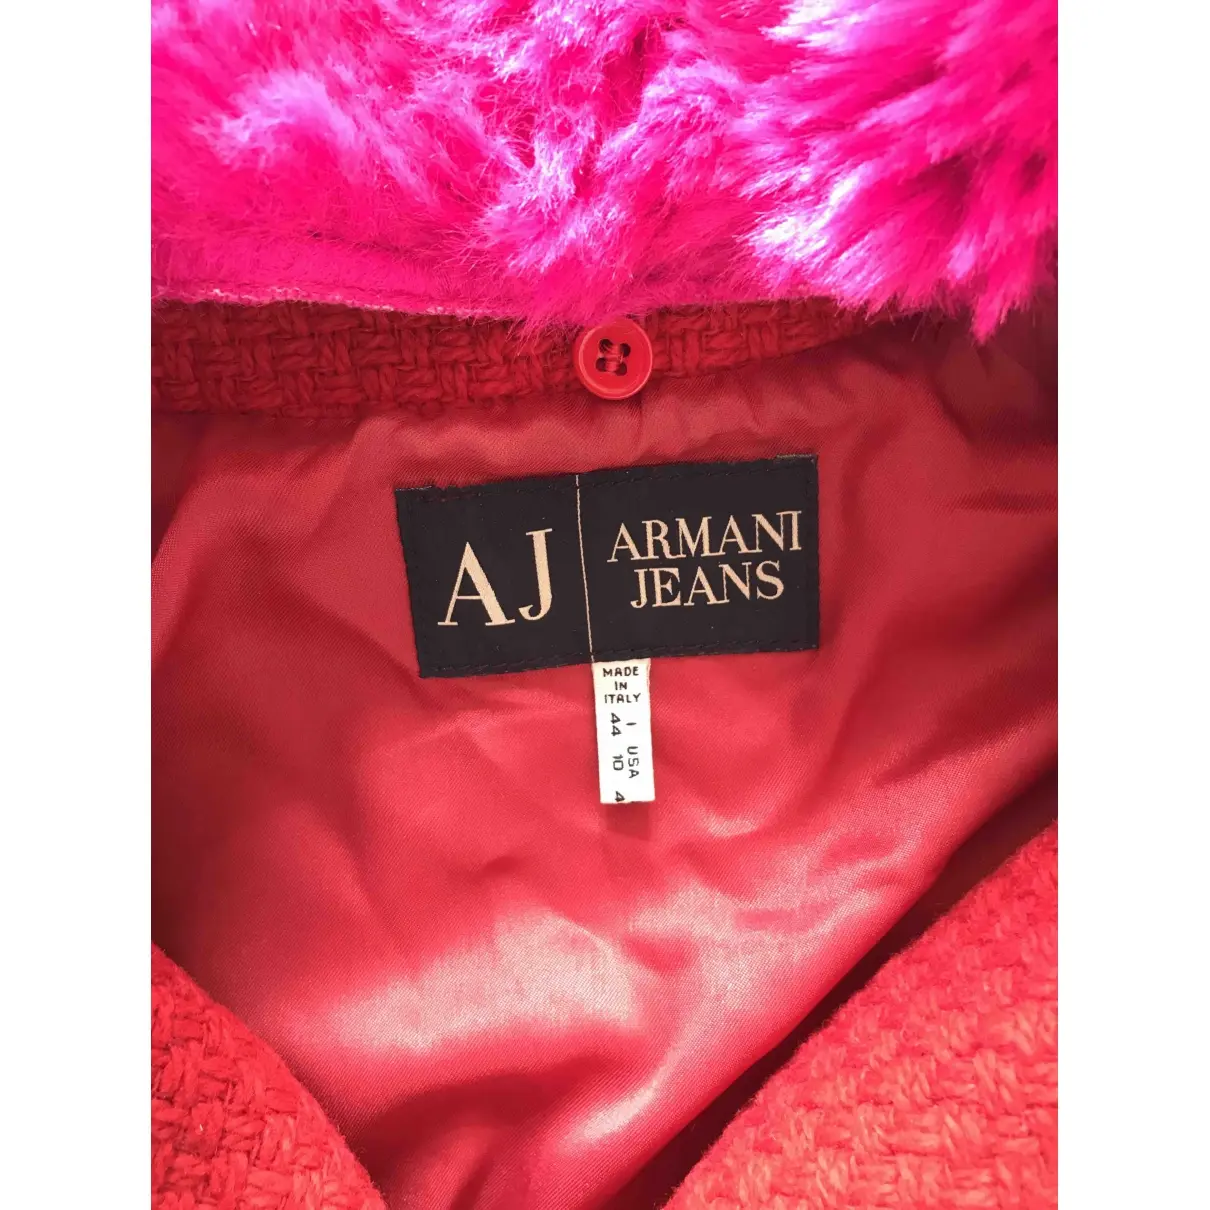 Buy Armani Jeans Wool jacket online